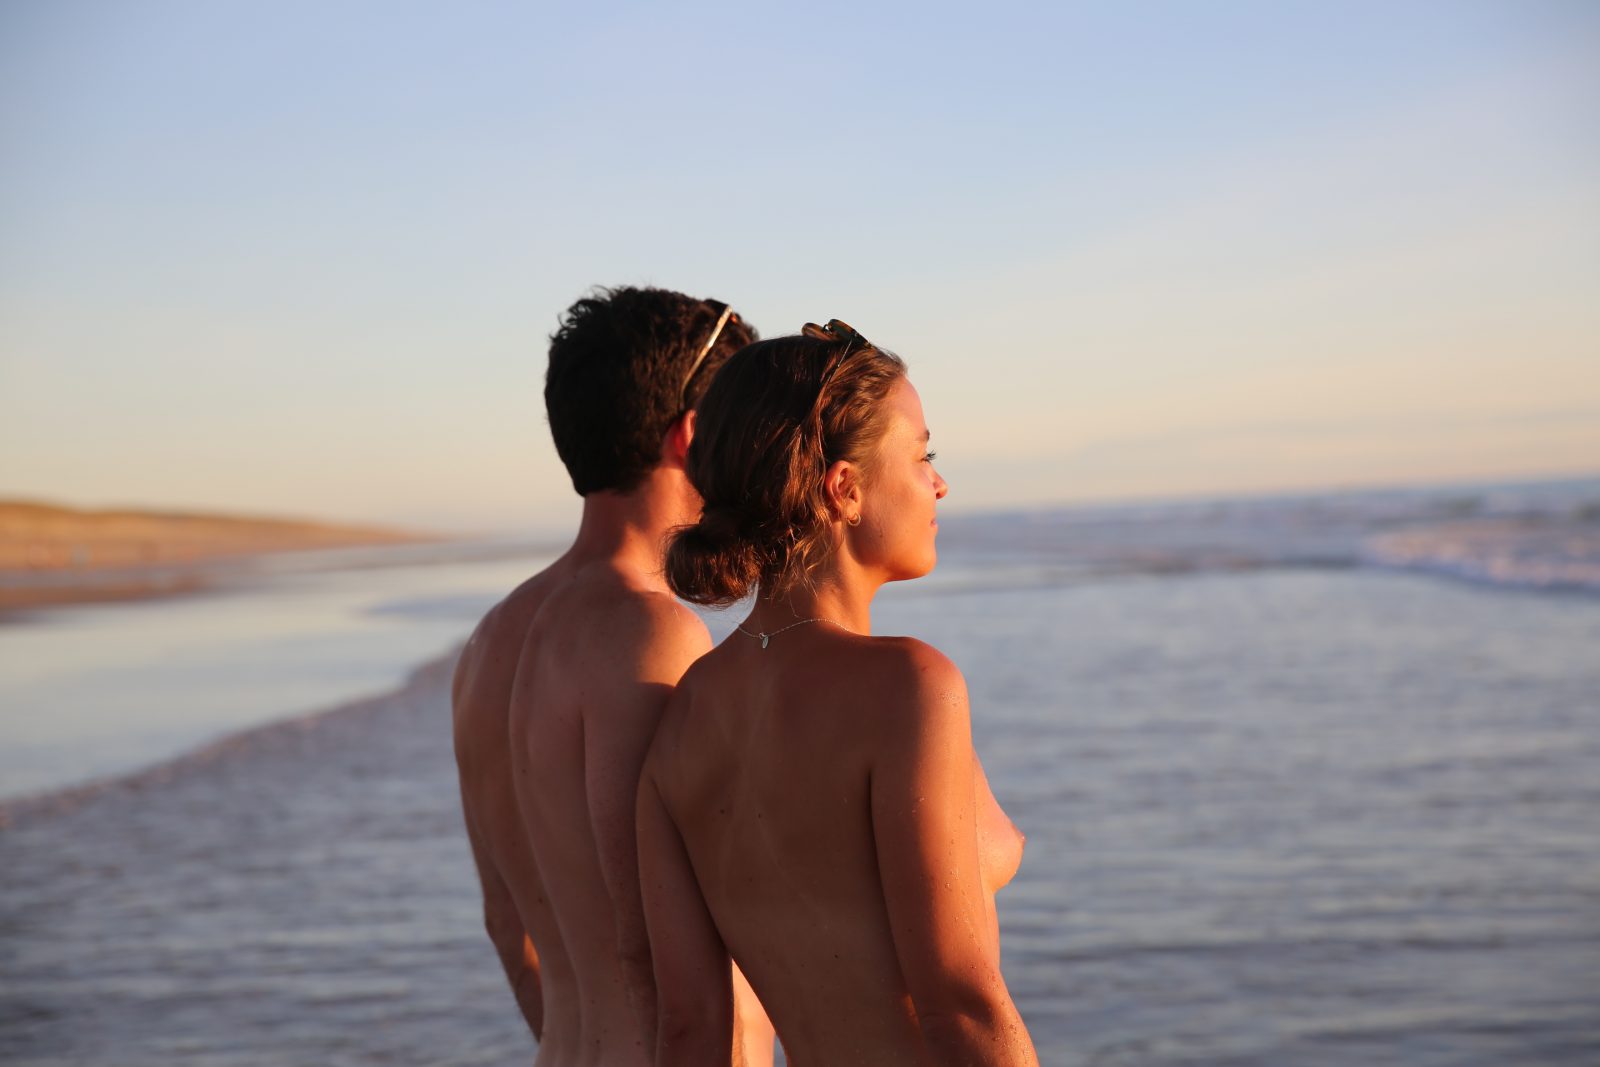 deedee dennis share french nudist colonies photos